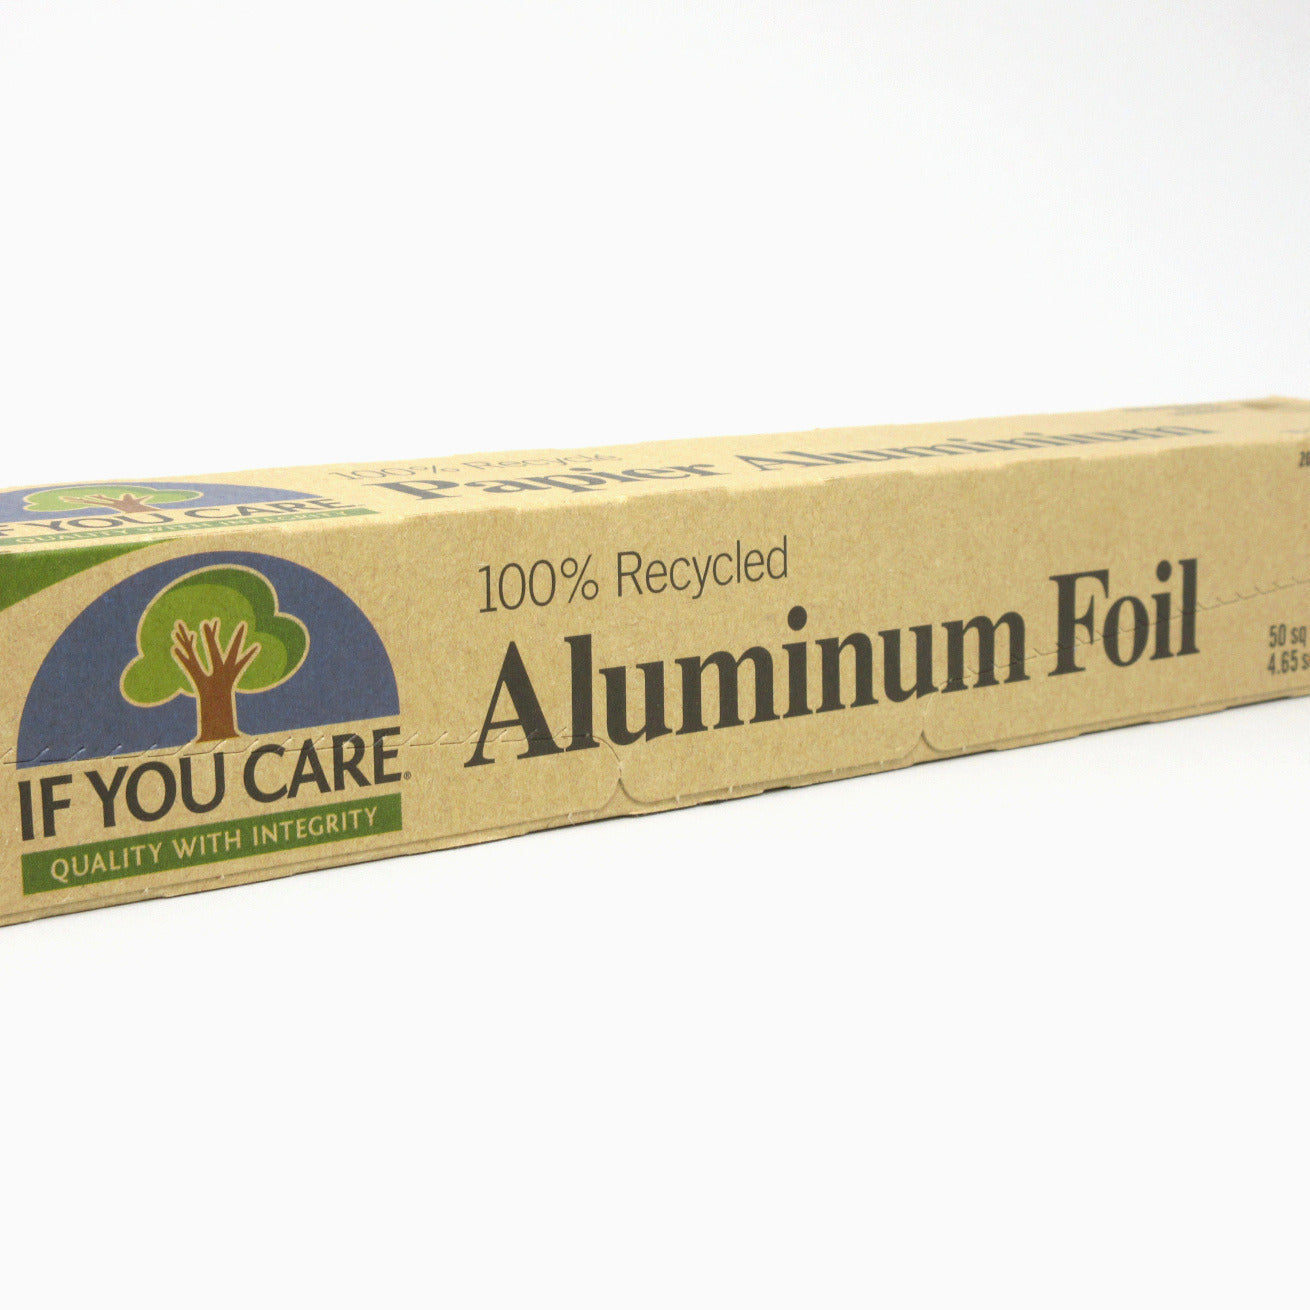 Flour Barrel product image - If You Care Aluminum Foil